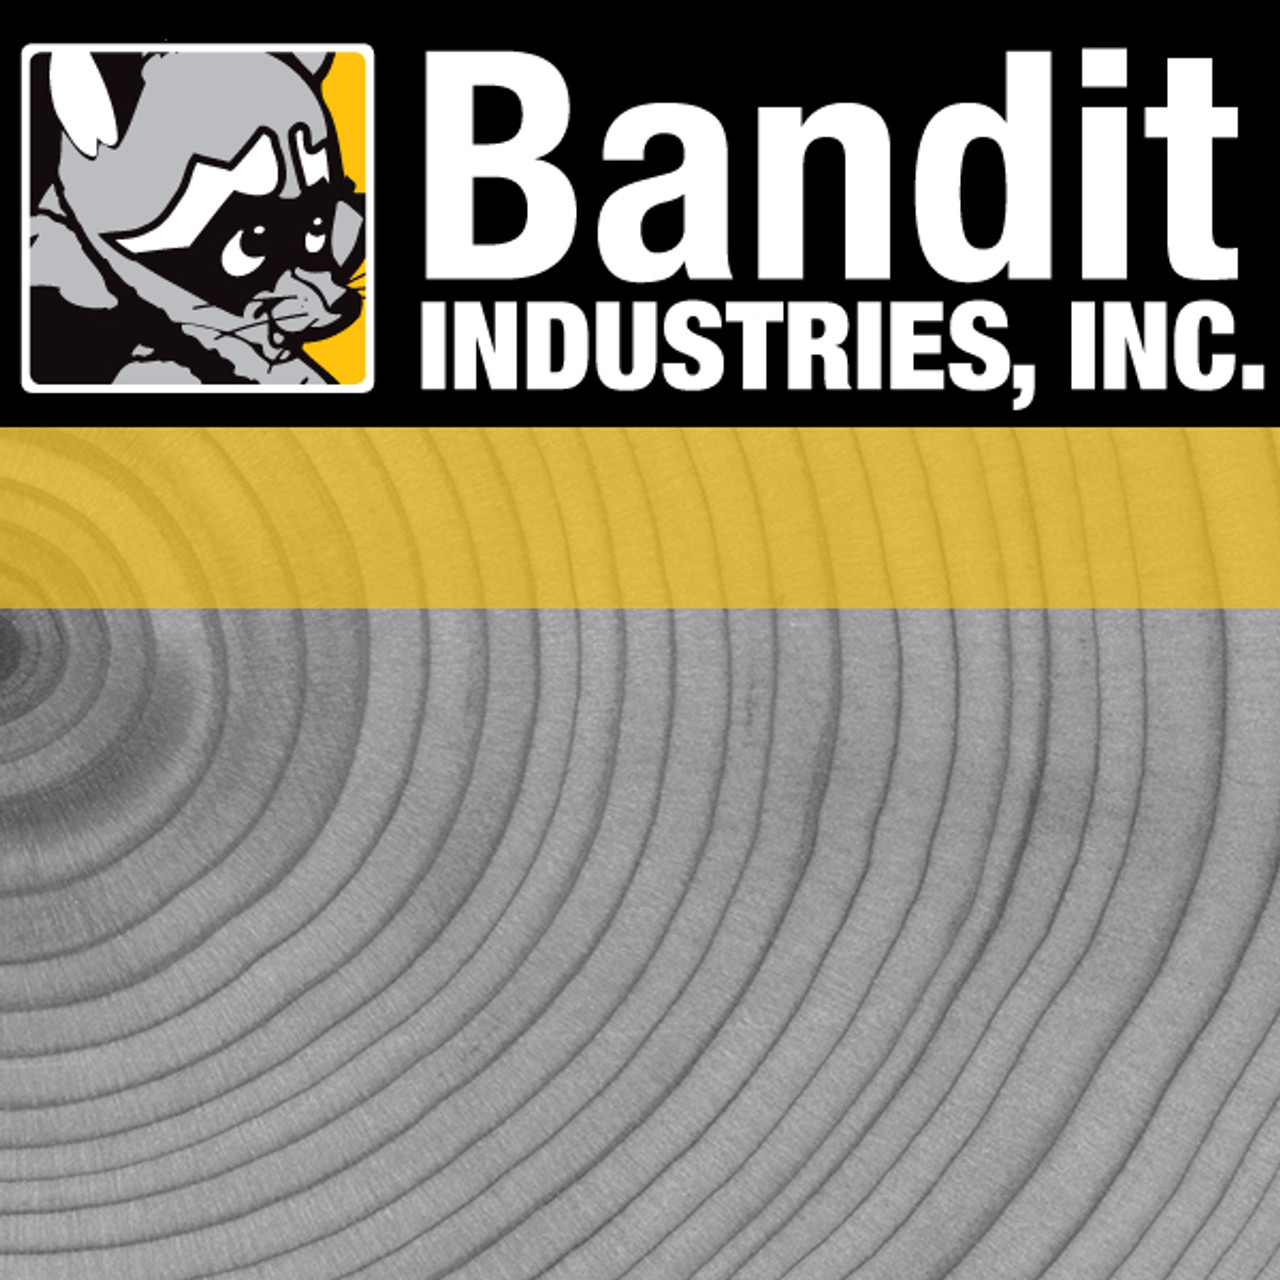 904-0002-86: BANDIT CLUTCH DISC. 9"" ROCKFORD 4-25754  3 LBS.